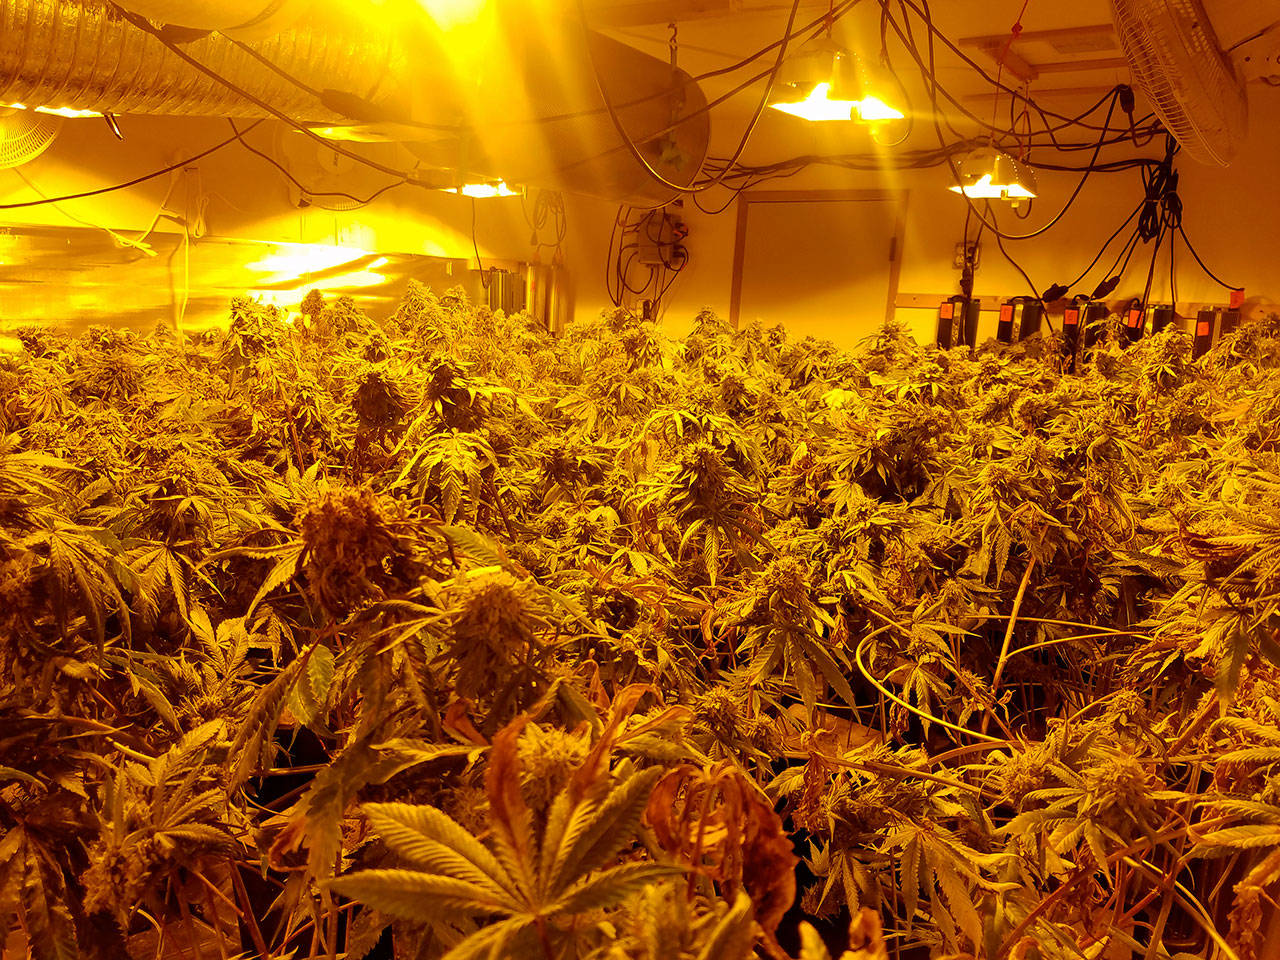 A marijuana grow operation was discovered inside a house on Saddle Club Road Southeast in South Kitsap. (Kitsap County Sheriff’s Office photo)